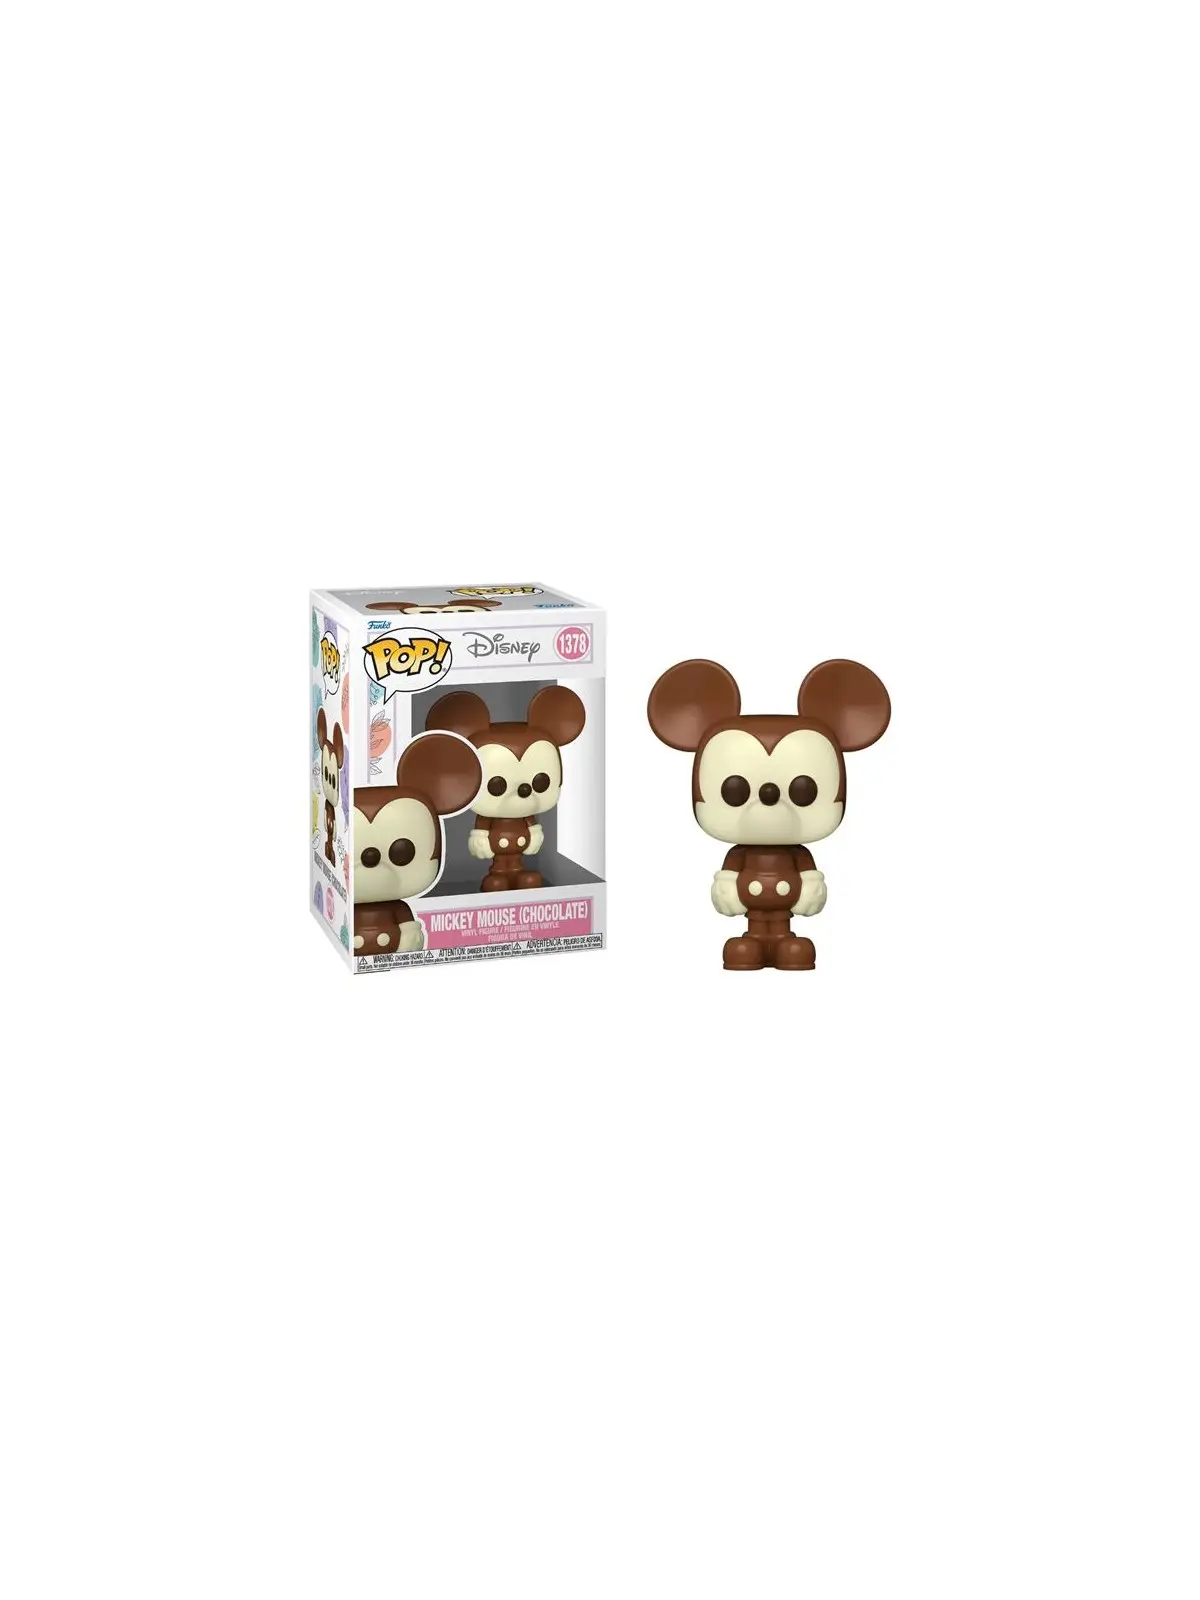 Funko Pop Disney Mickey Mouse Chocolate 1378